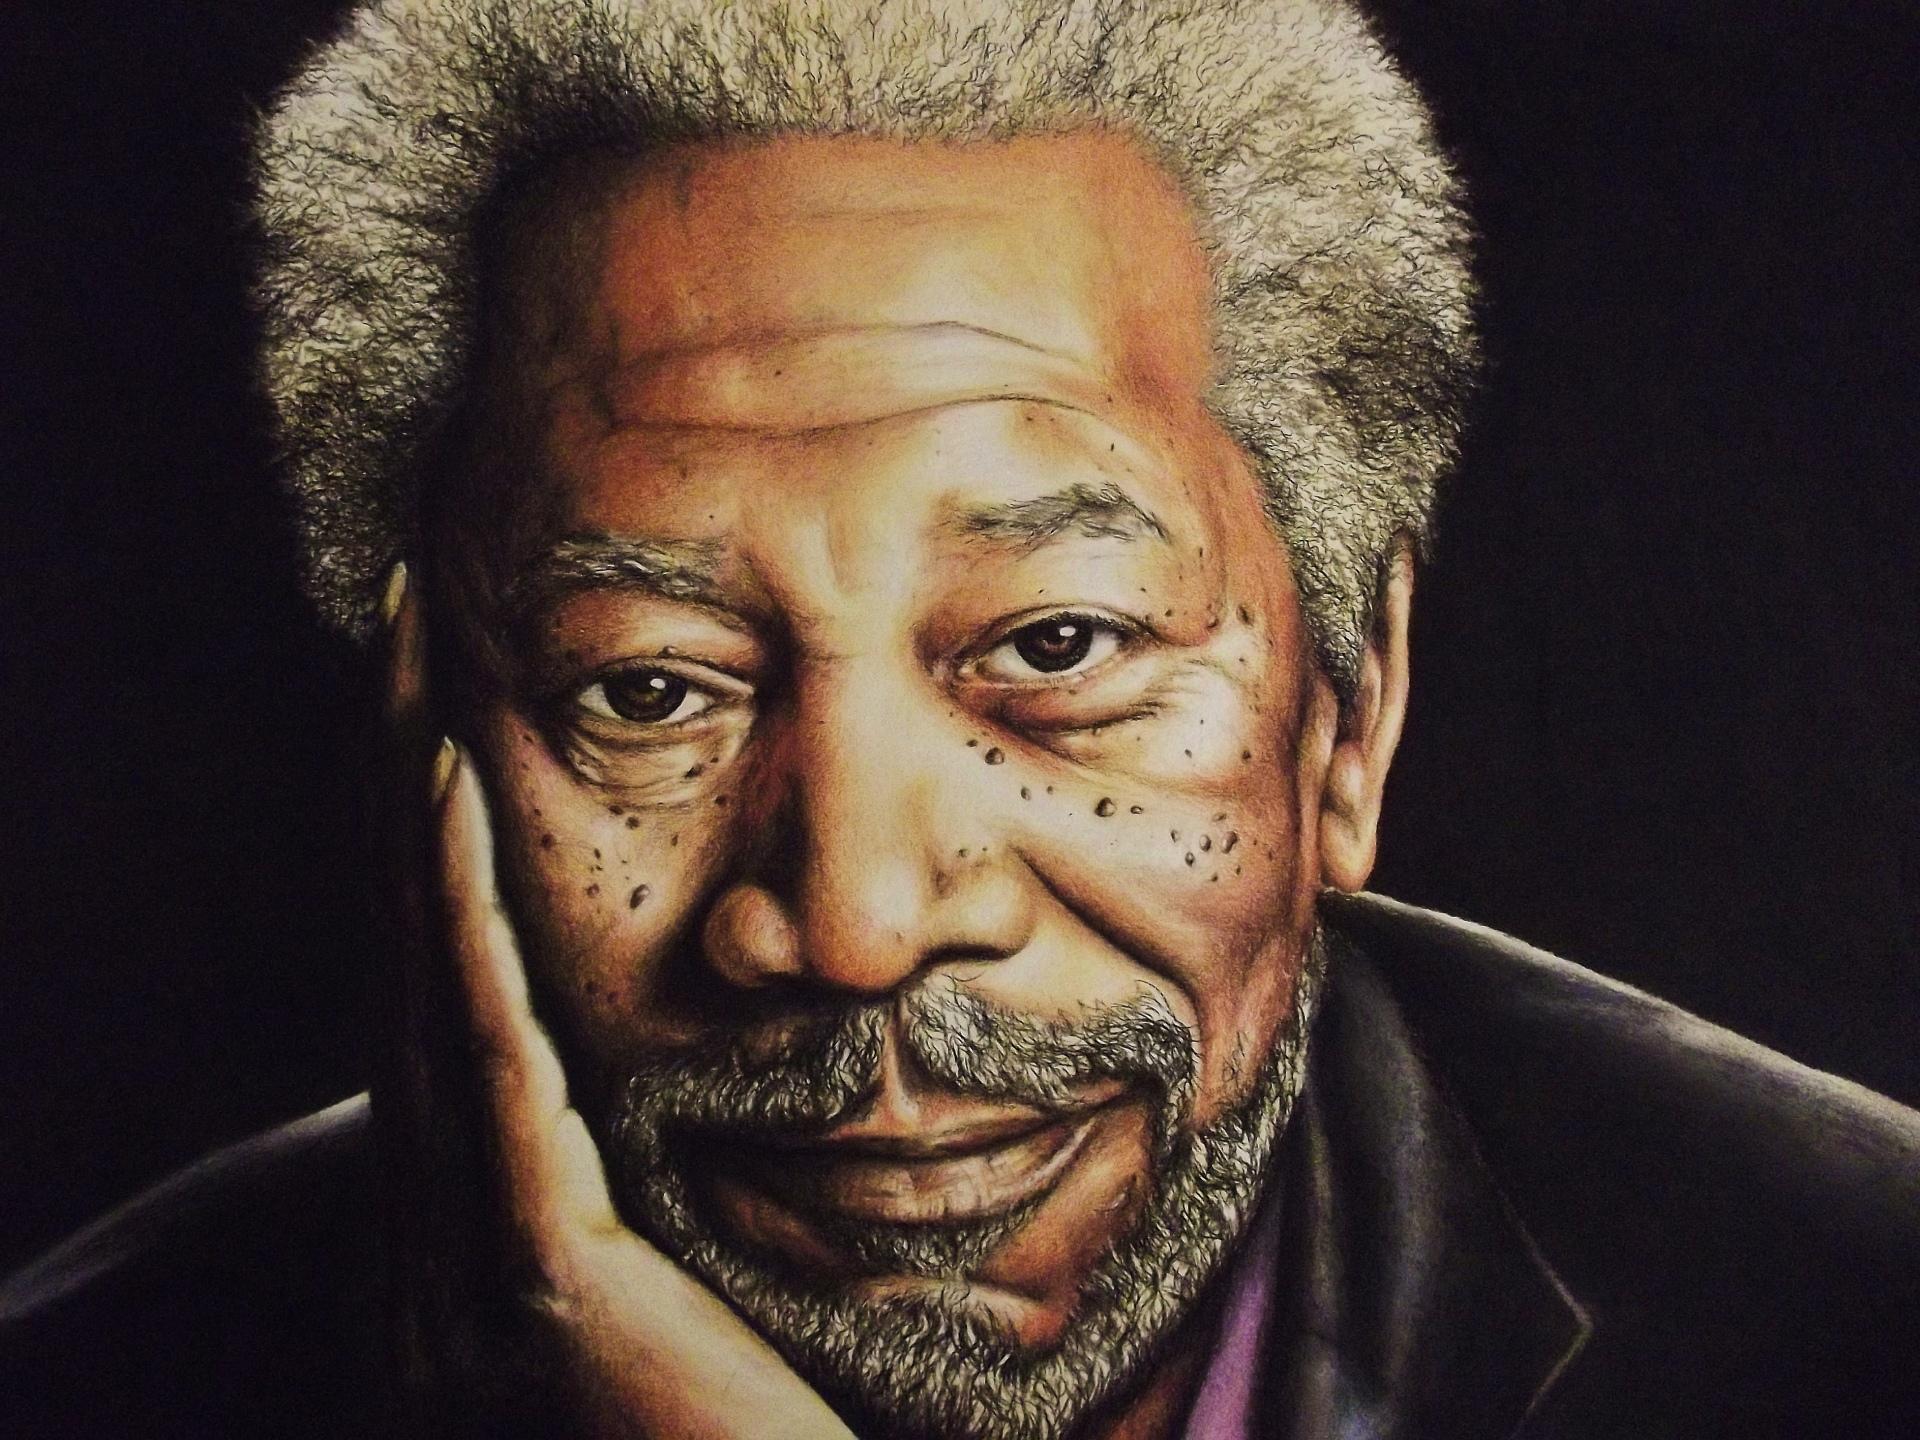 Morgan Freeman at 1280 x 960 size wallpapers HD quality